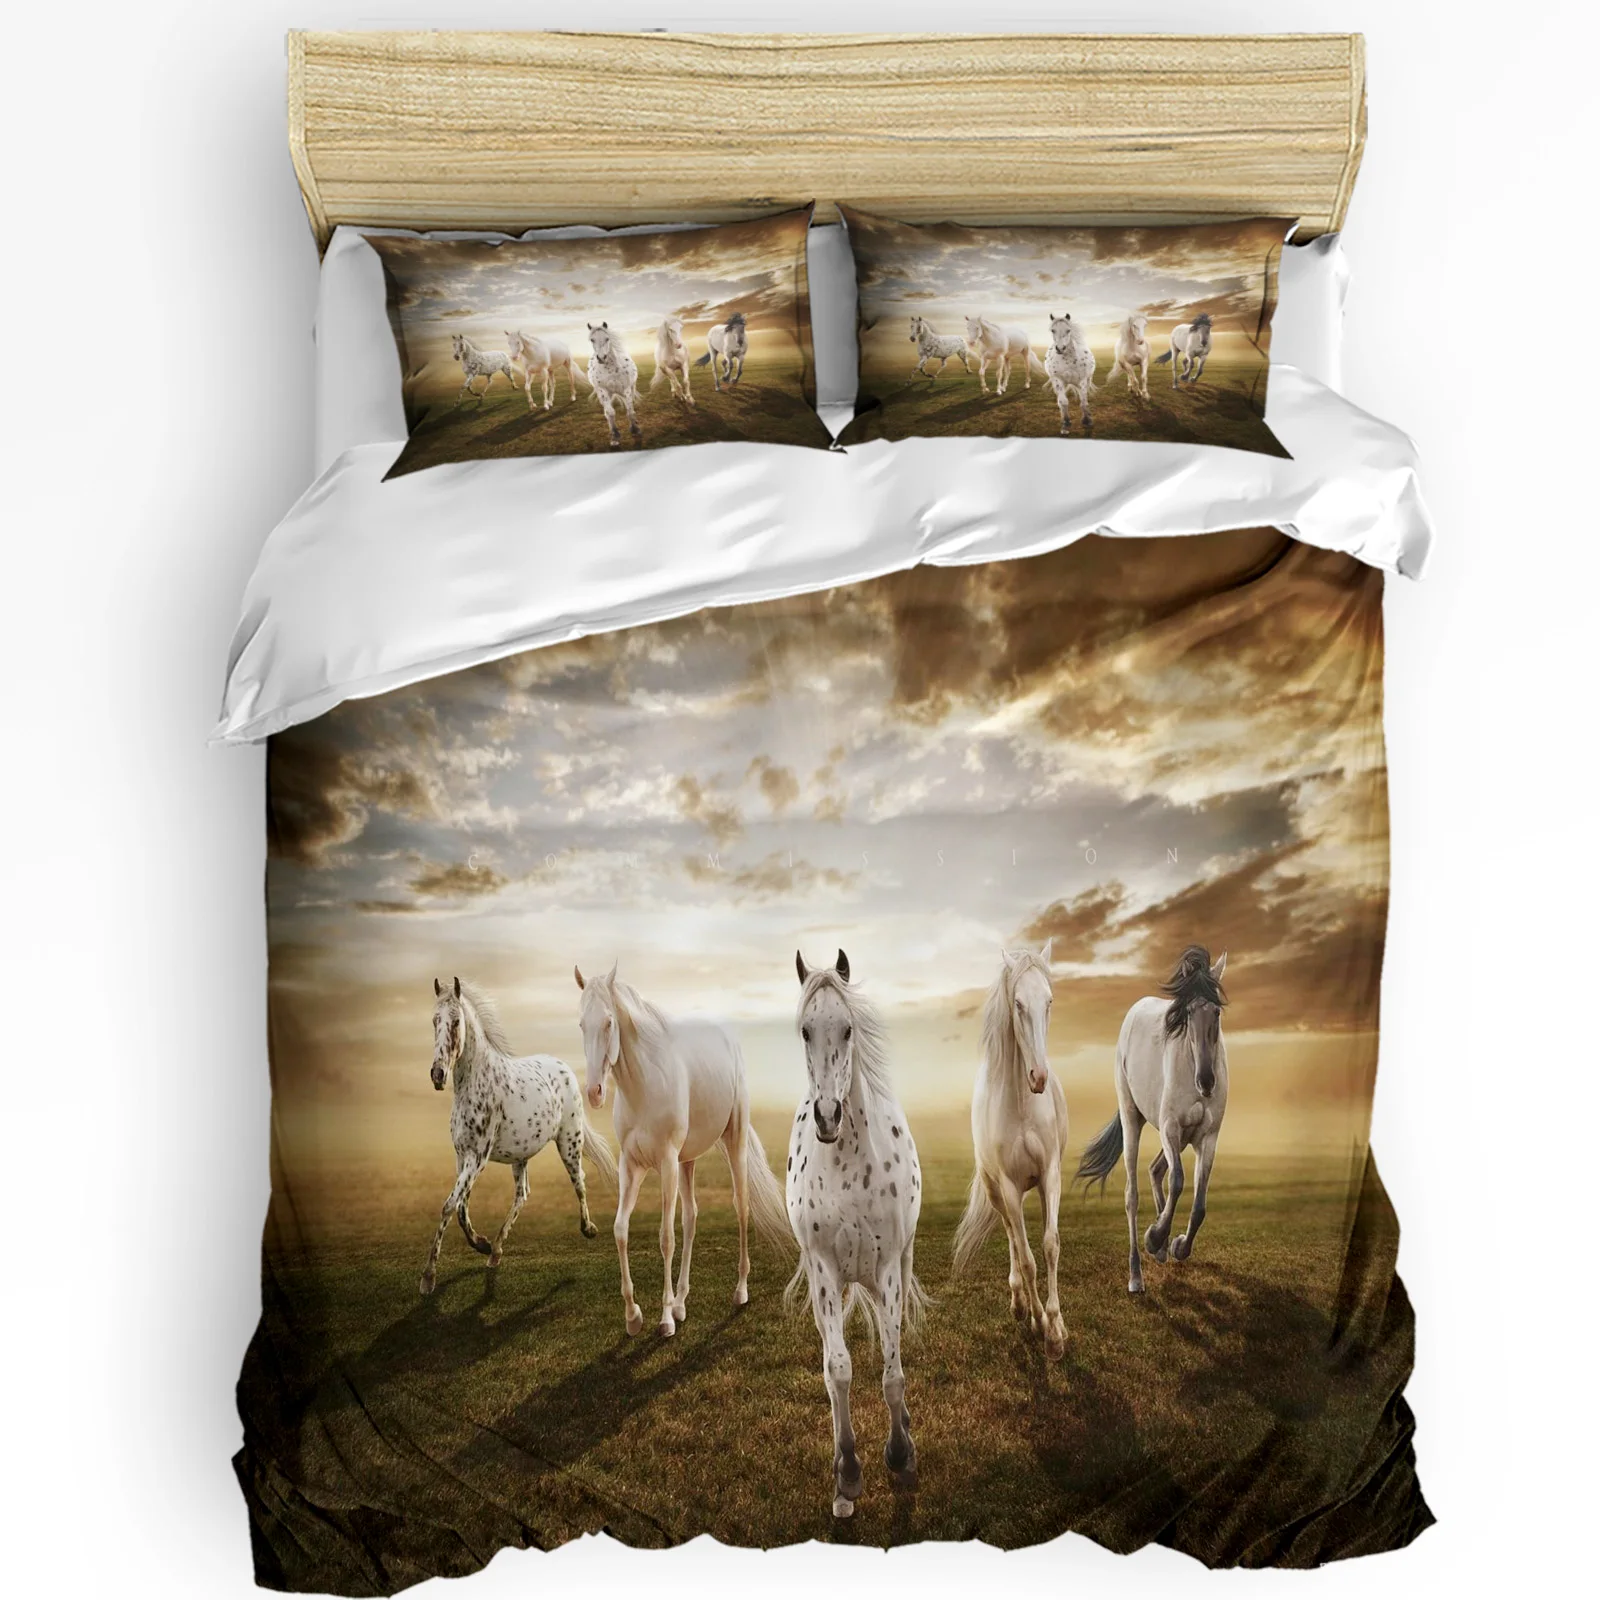 

Prairie White Horse Clouds Printed Comfort Duvet Cover Pillow Case Home Textile Quilt Cover Boy Kid Teen Girl 3pcs Bedding Set